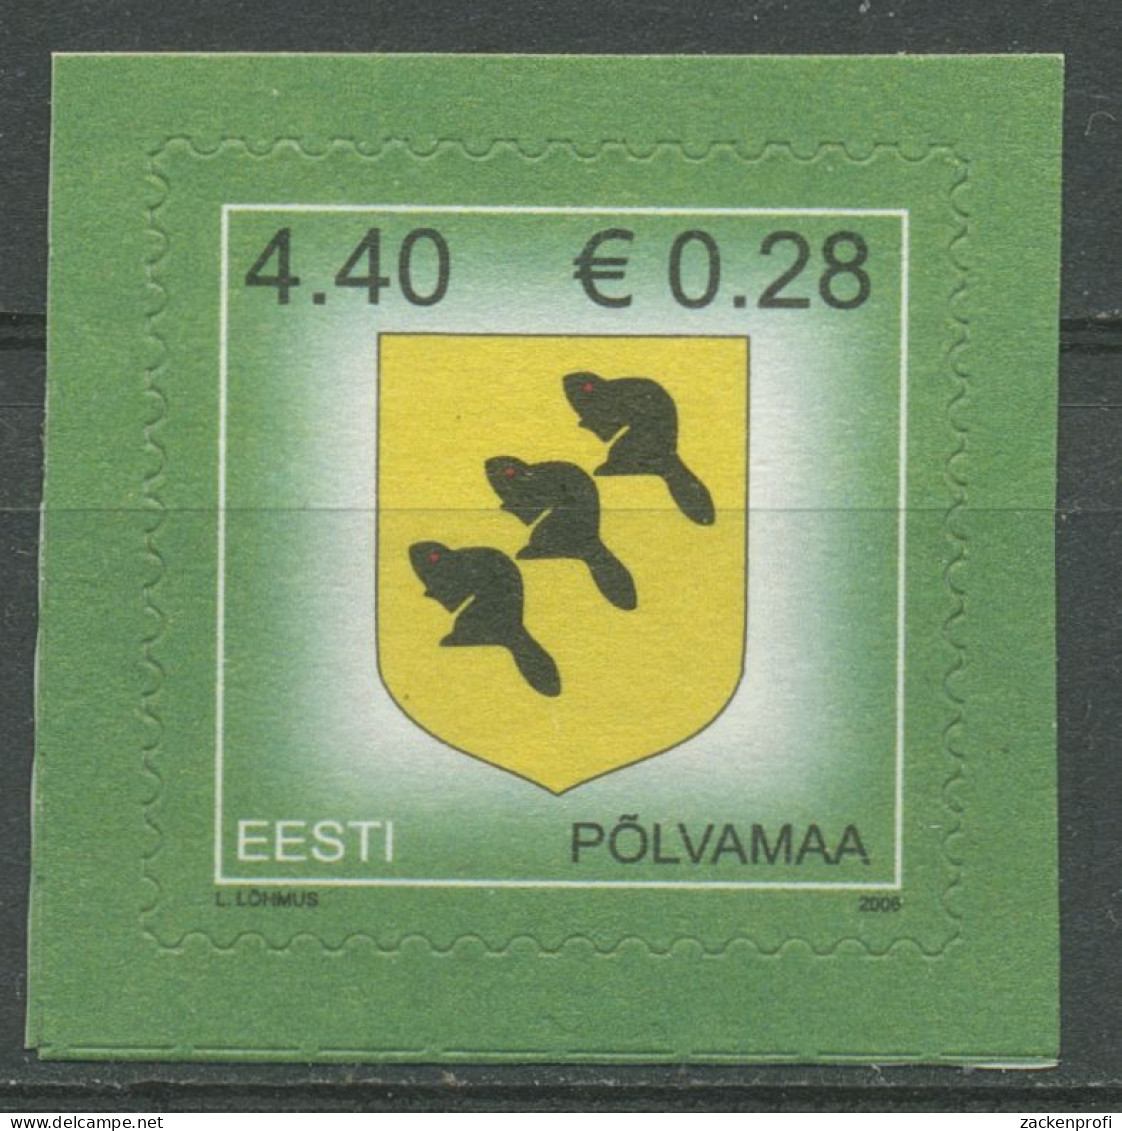 Estland 2006 Freimarke Wappen Polvamaa 543 Postfrisch - Estonia